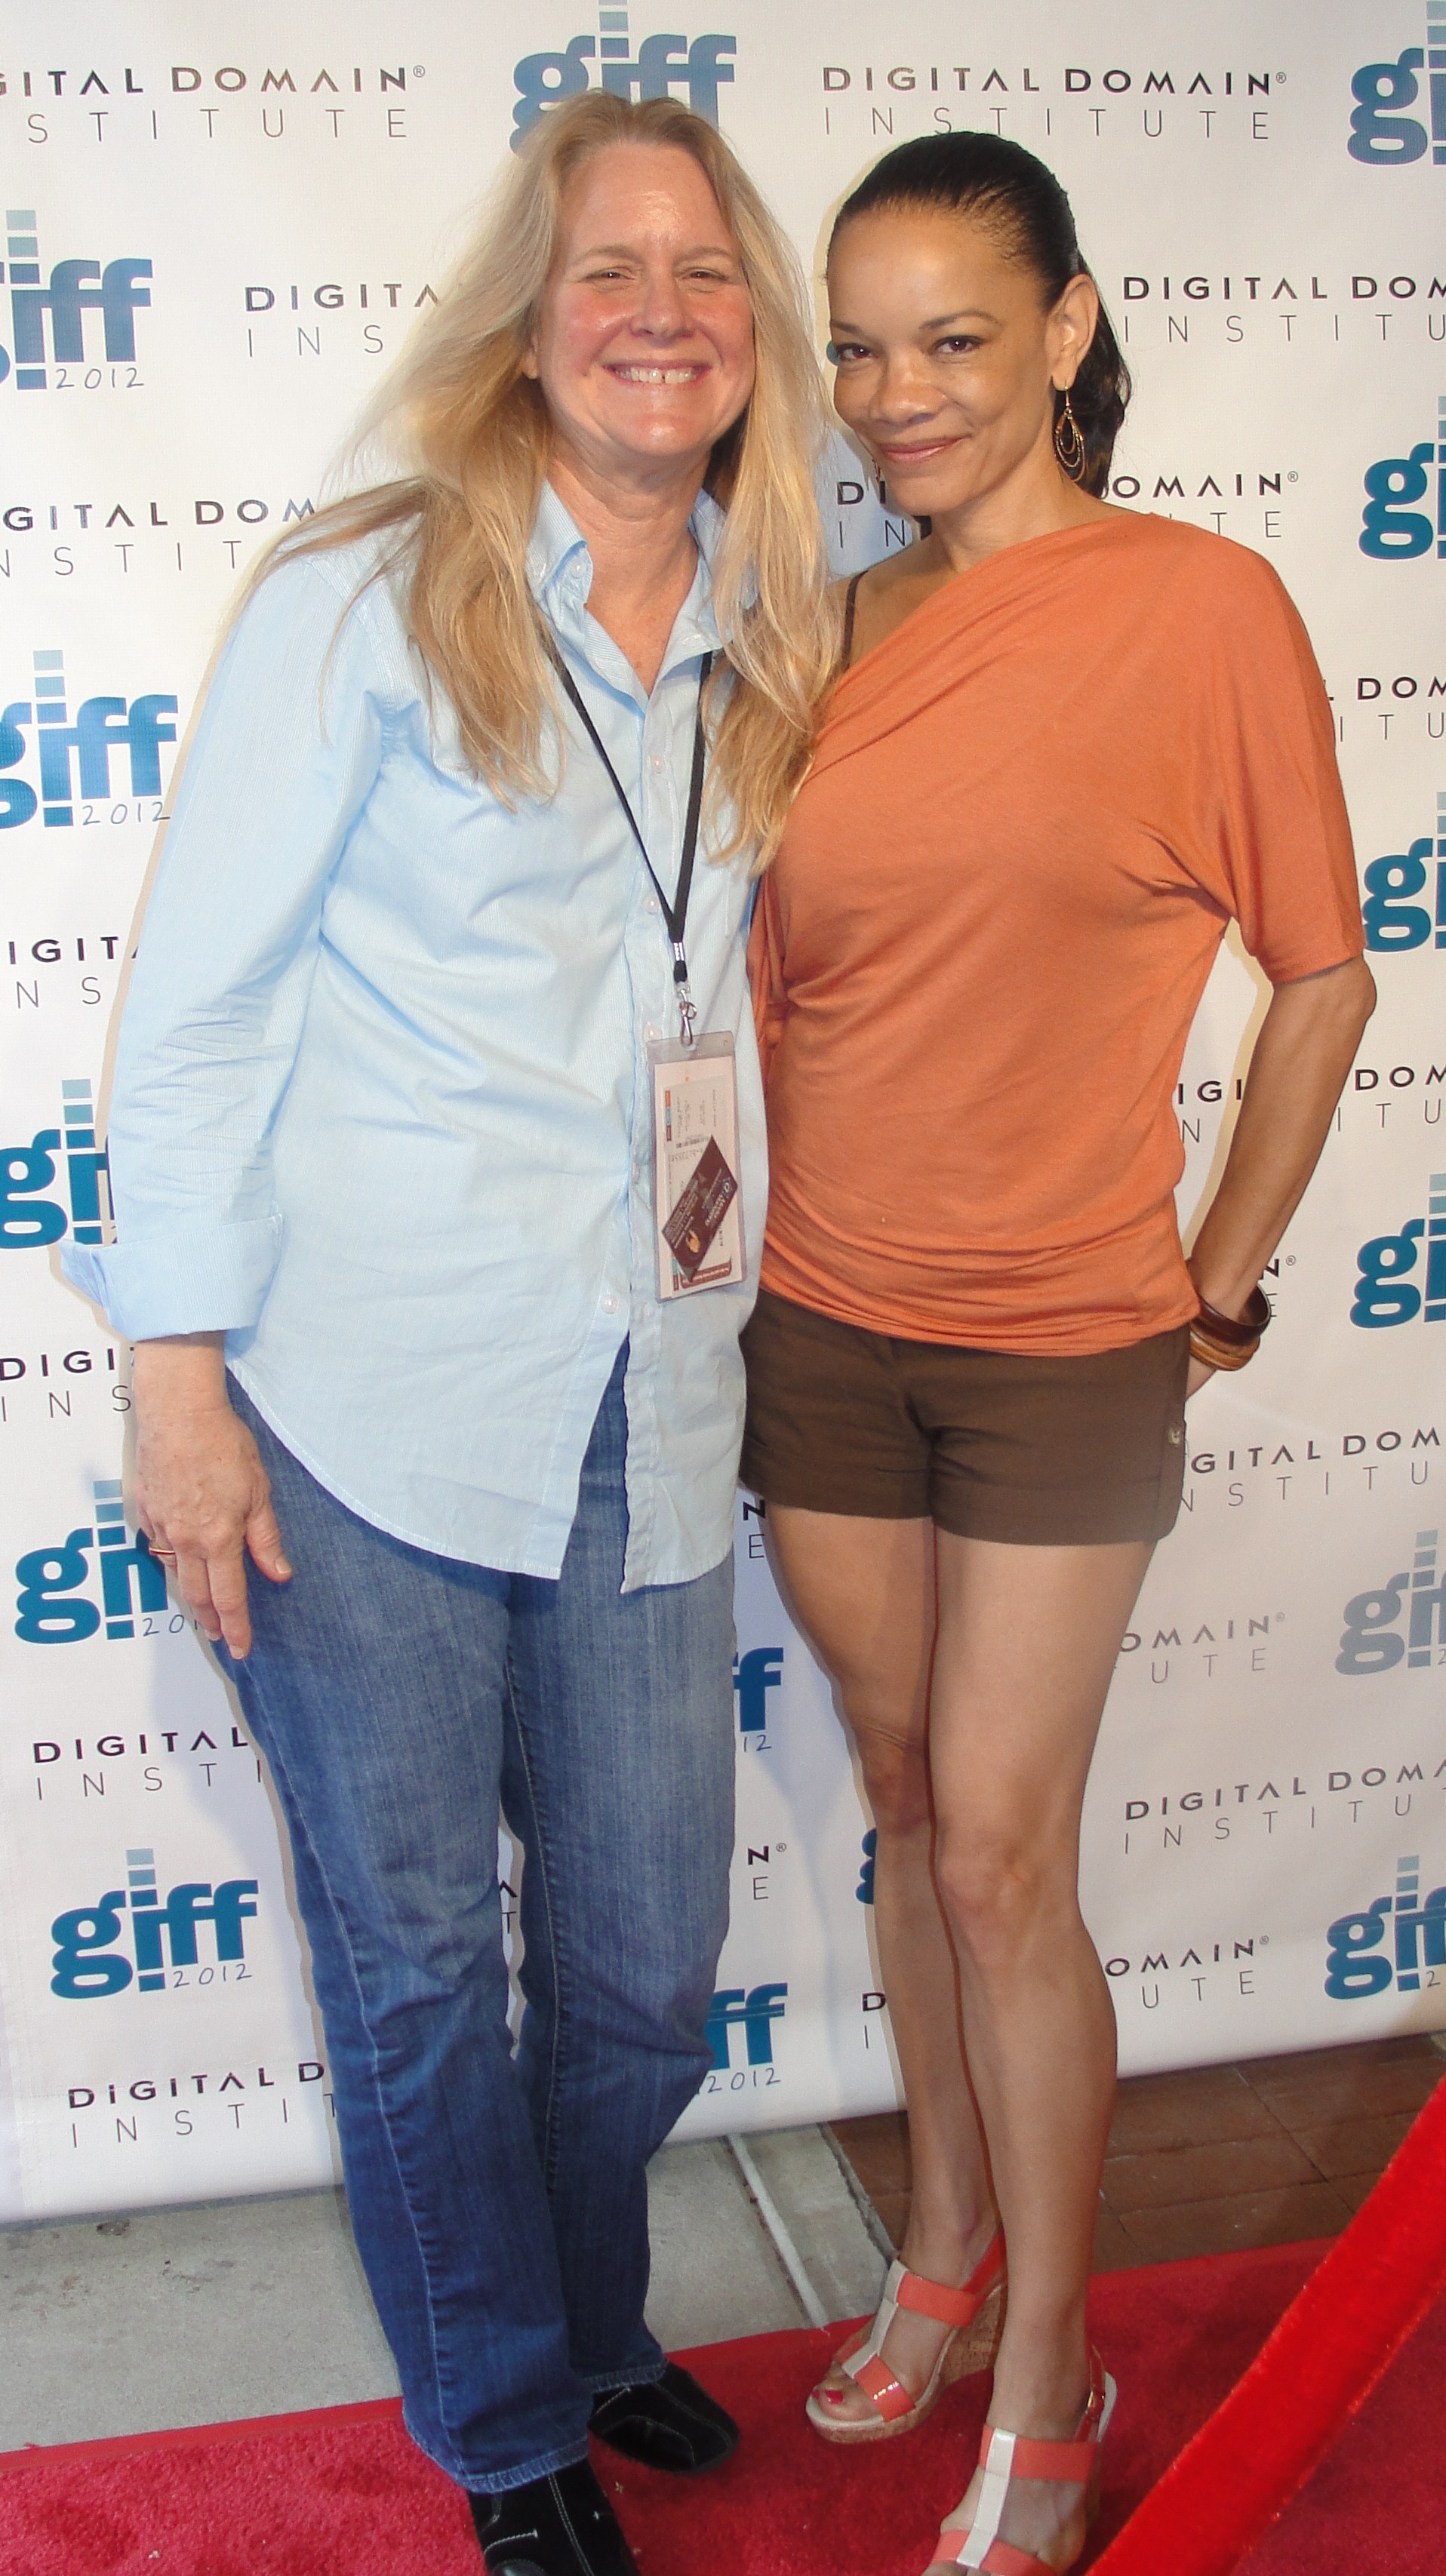 Gasparilla International Film Festival 2012 with Evening Rooom's Director Victoria Jorgensen.